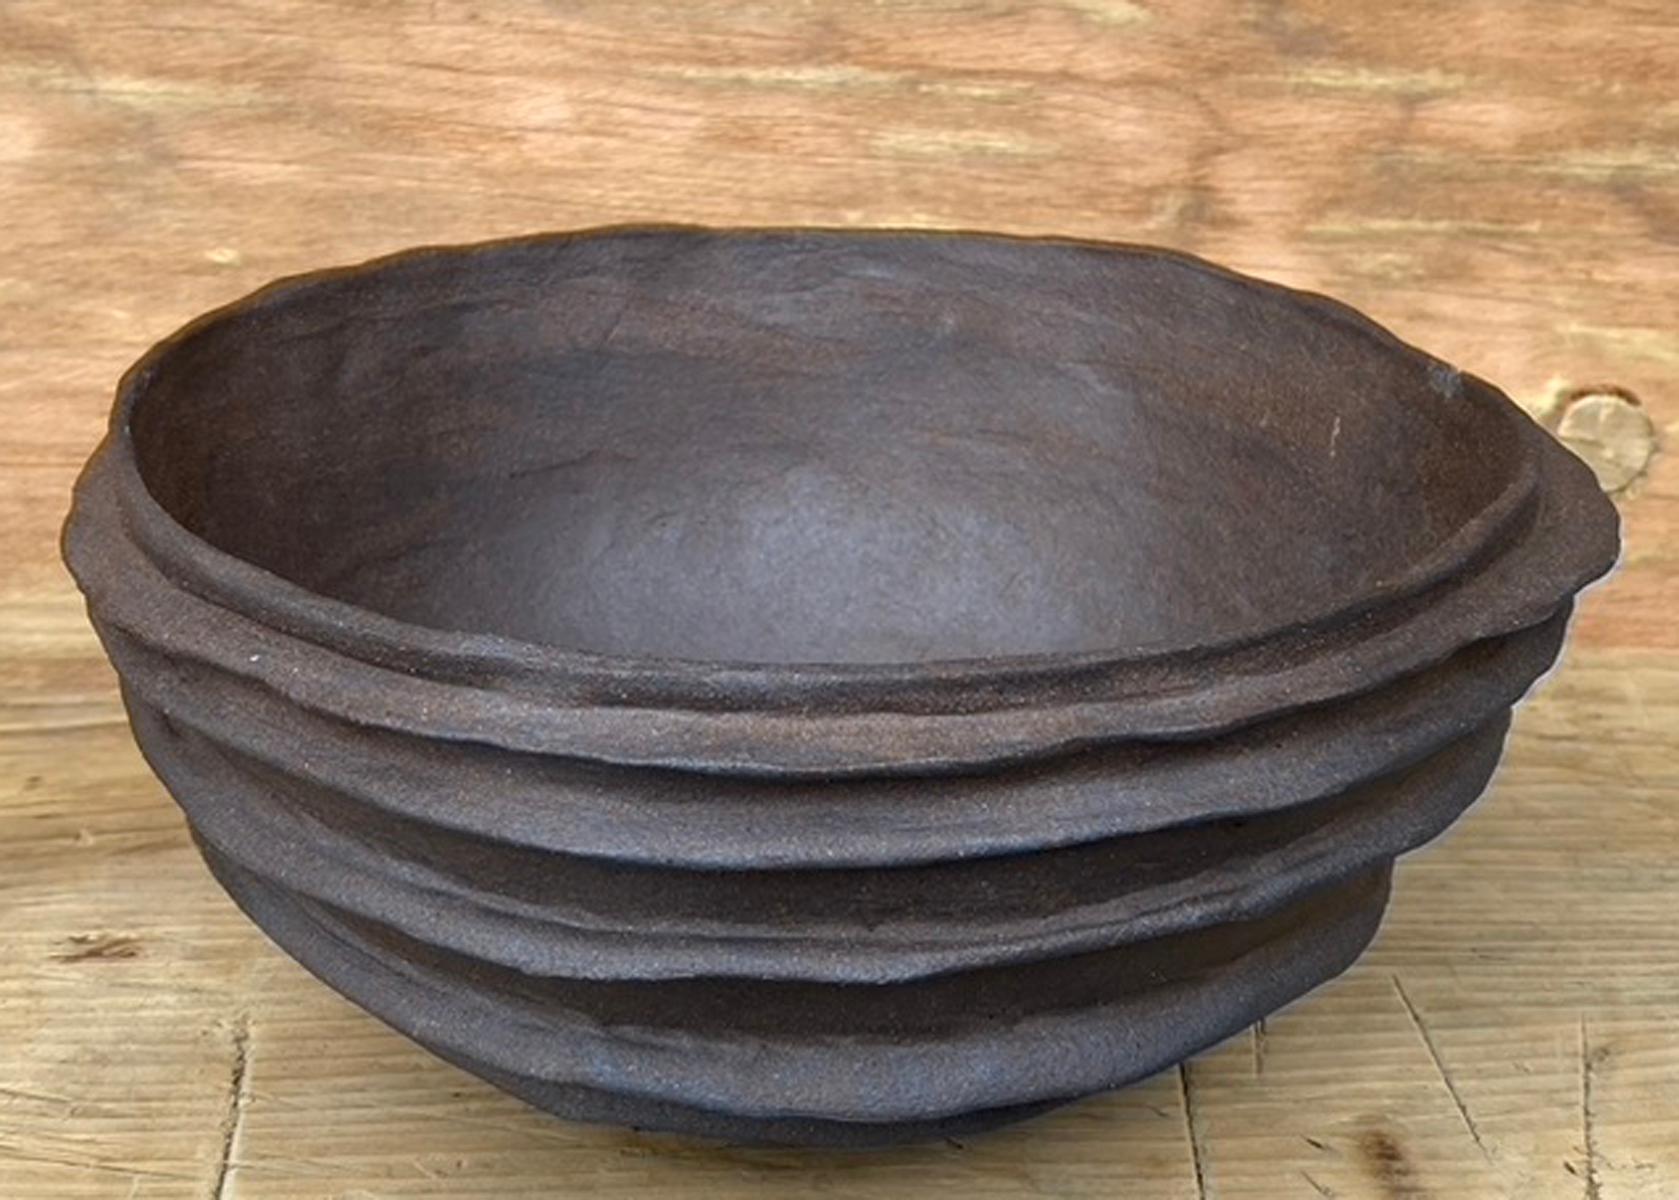 American Hand Built Ceramic Planter or Bowl